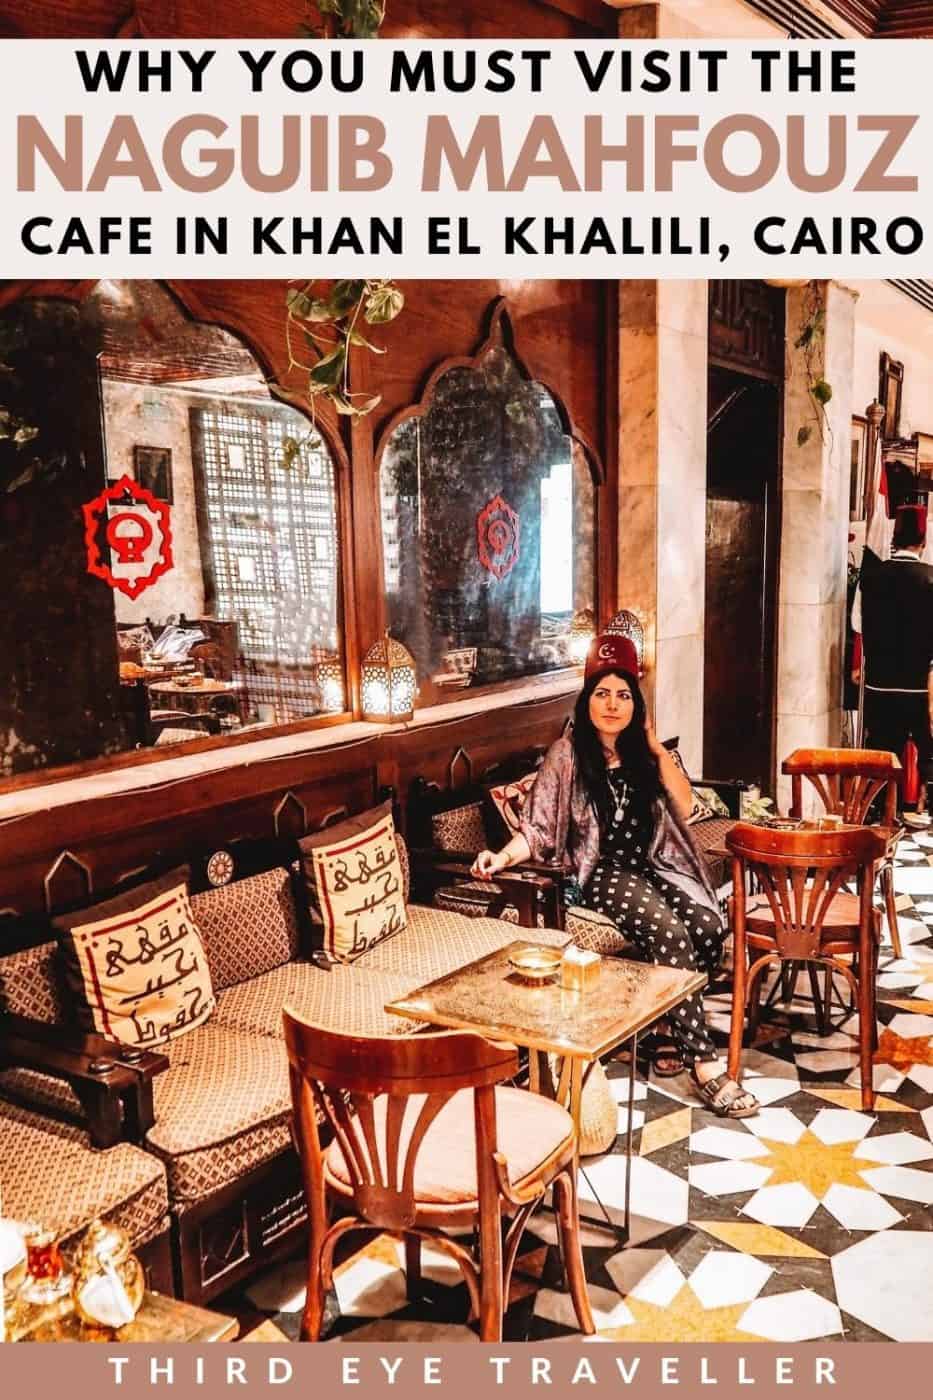 Naguib Mahfouz Cafe Cairo Khan el Khalili Restaurant